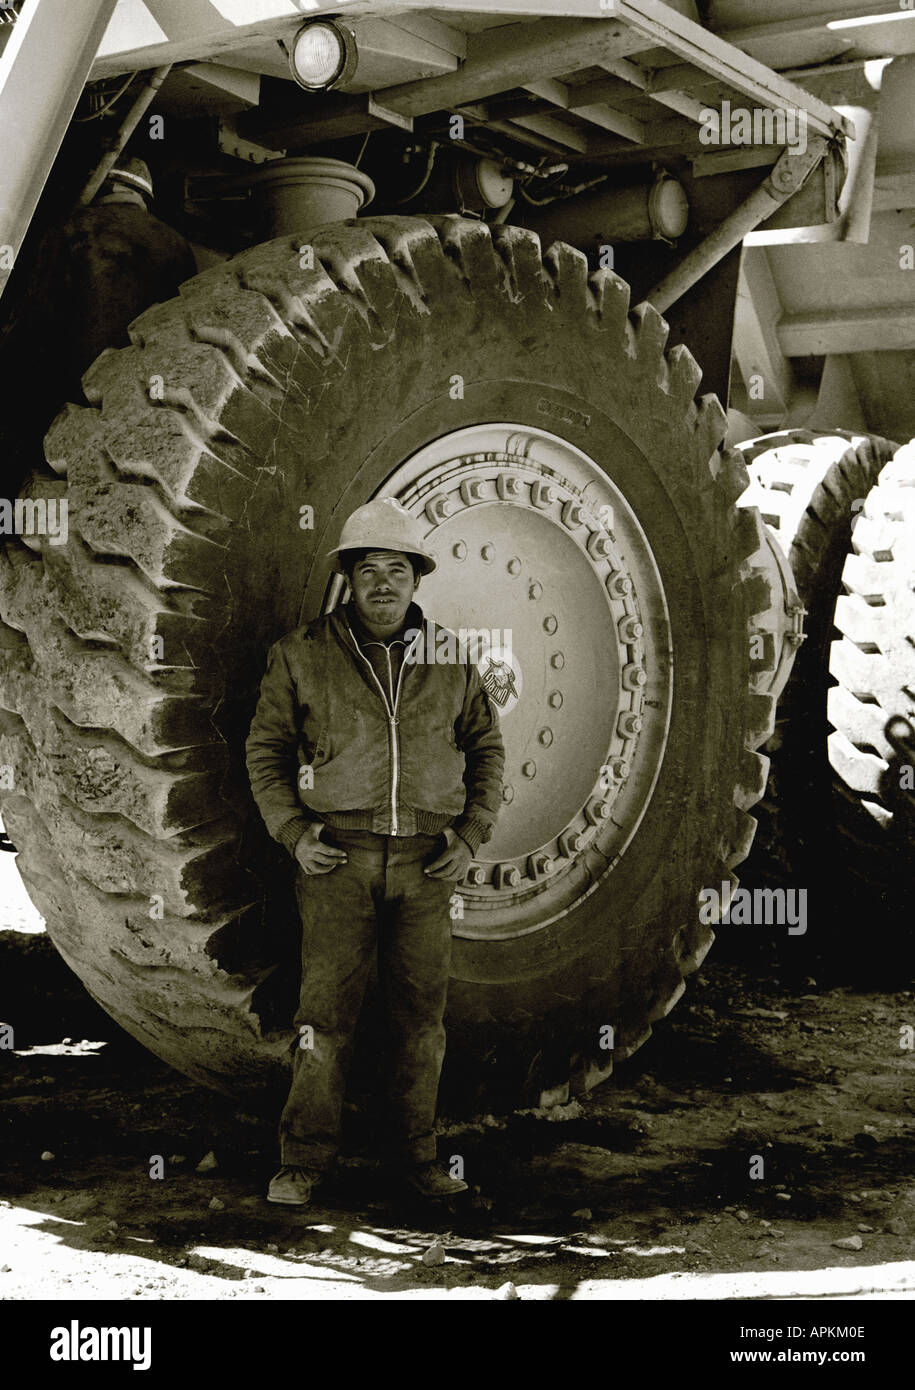 The wheel of a Unirig mining dump truck operating at Peru's Cuajone copper mine in 1973 monochrome photo Stock Photo